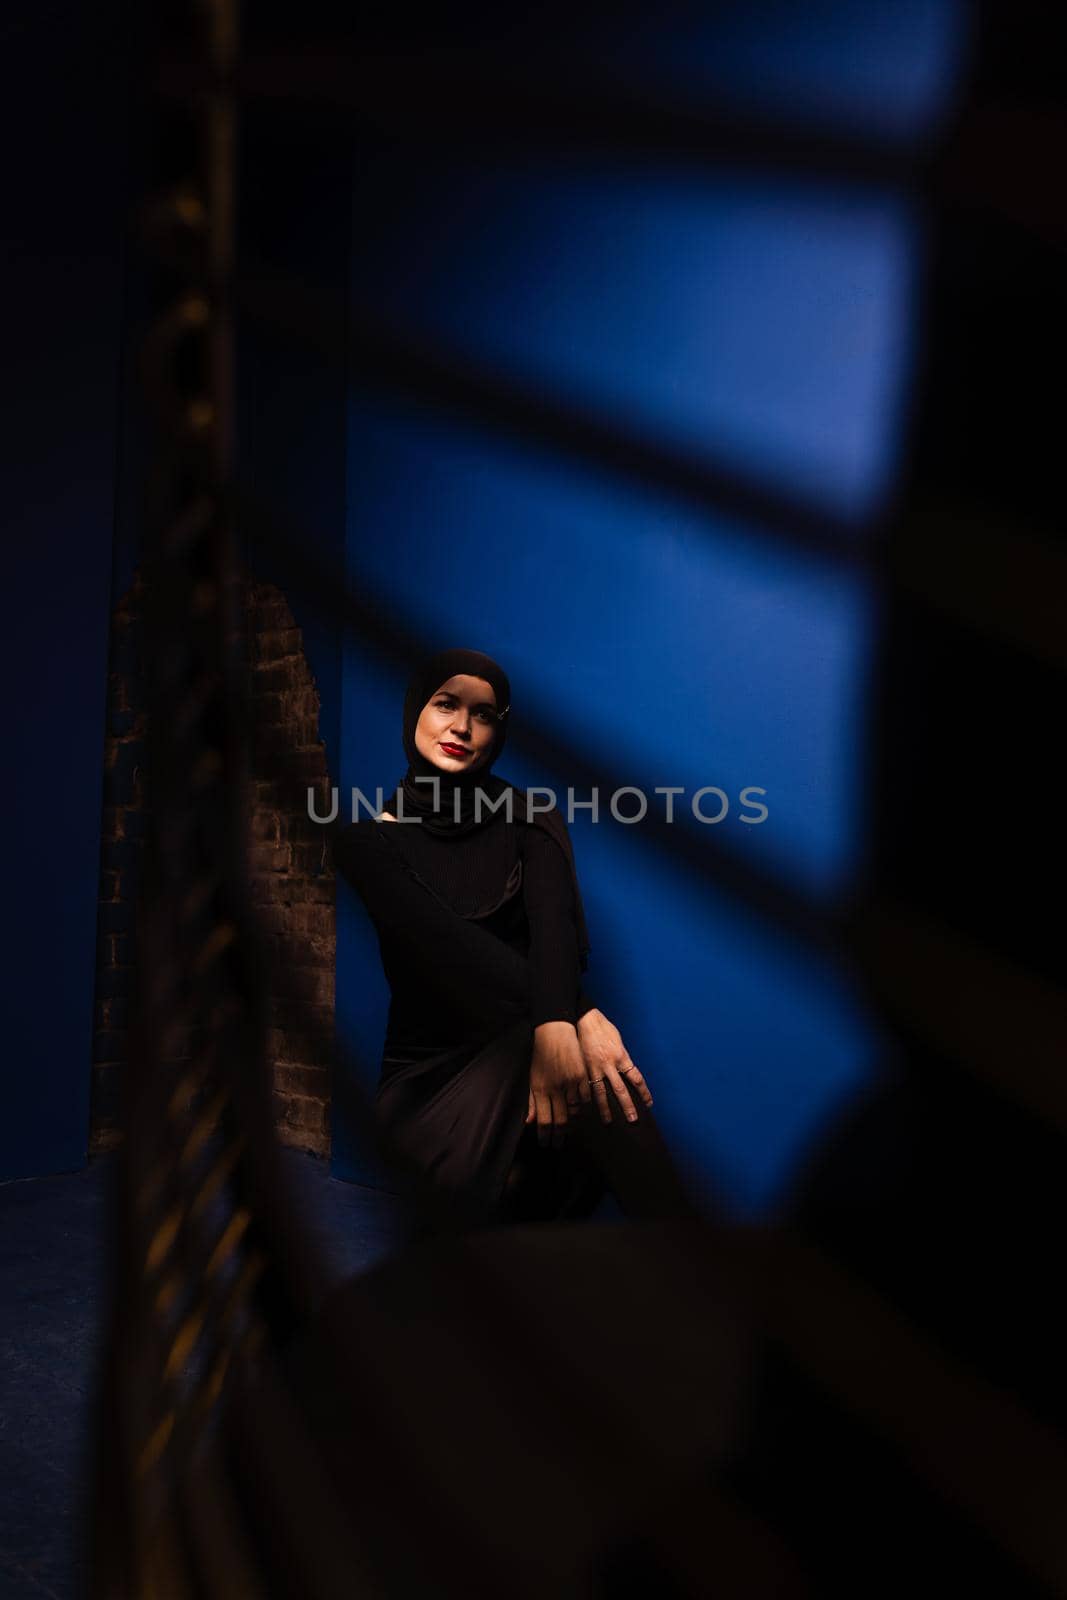 Fashion muslim model in black hijab is posing on blue background in studio. Islam religion creative photo.